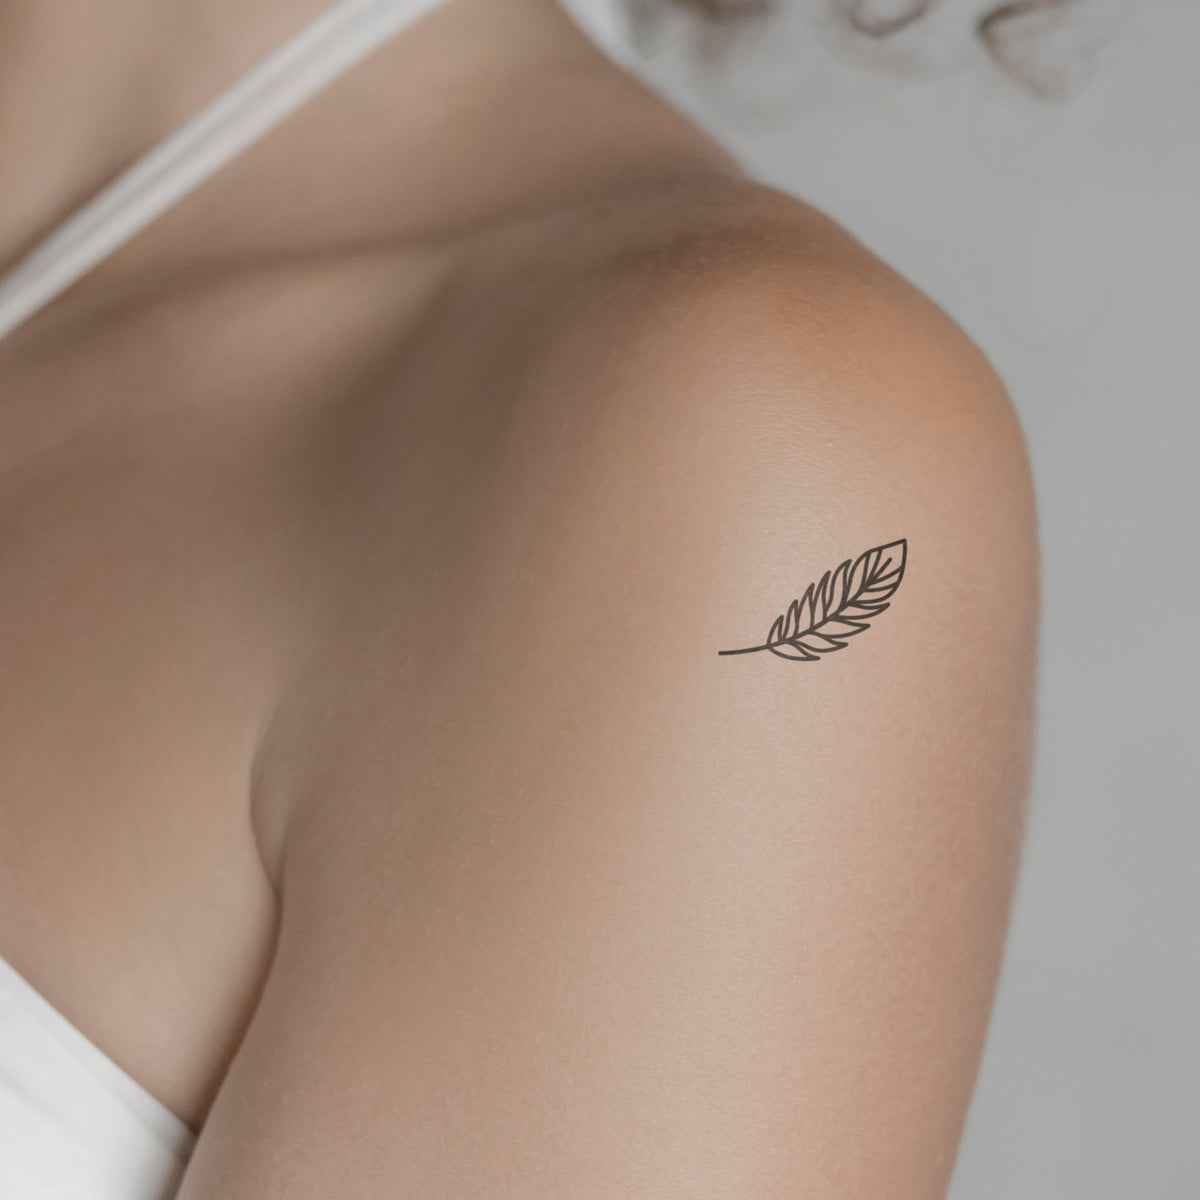 Honey Phoebe real simulation tattoo sticker| Alibaba.com